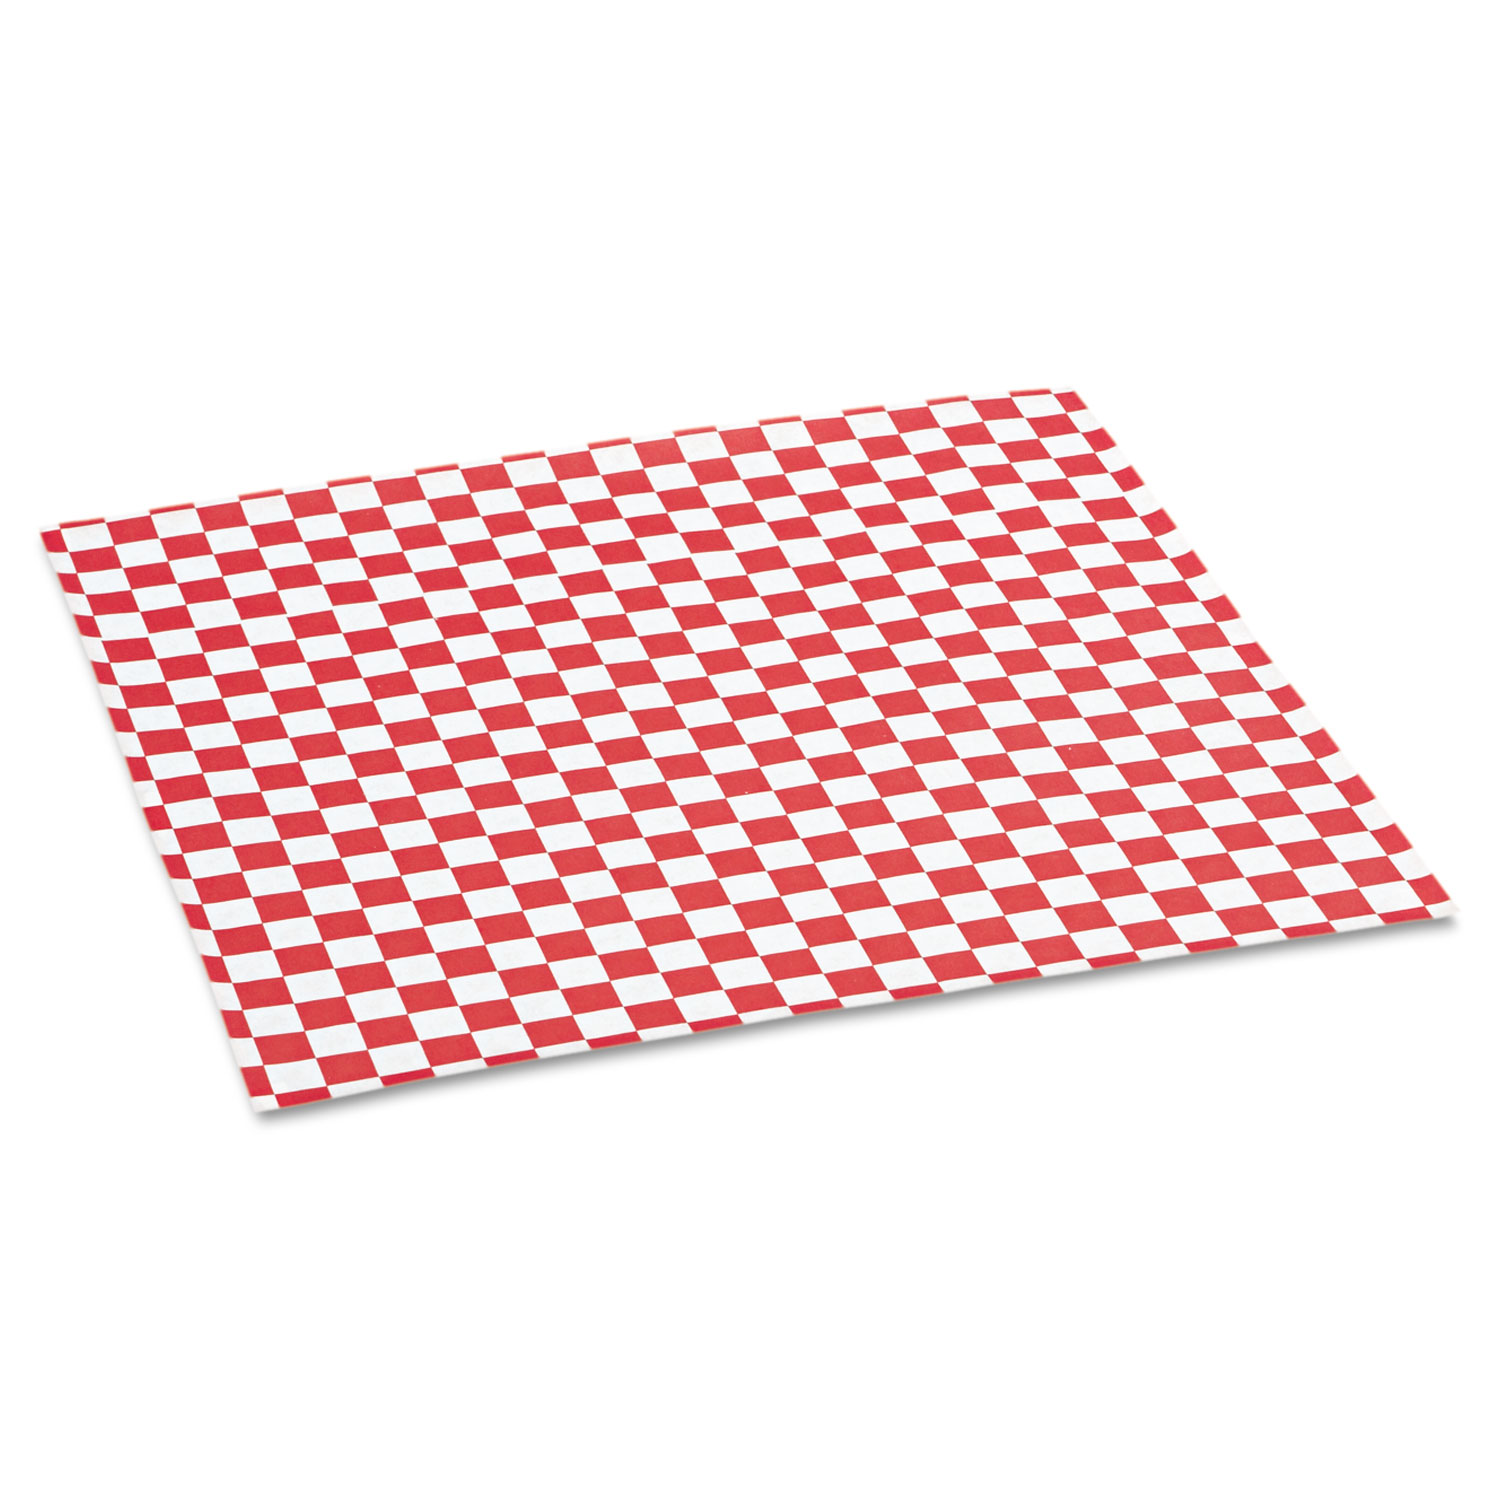 Black & White Checkered Wax Deli Sandwich Wrap Paper Sheets Basket Liner  12x12